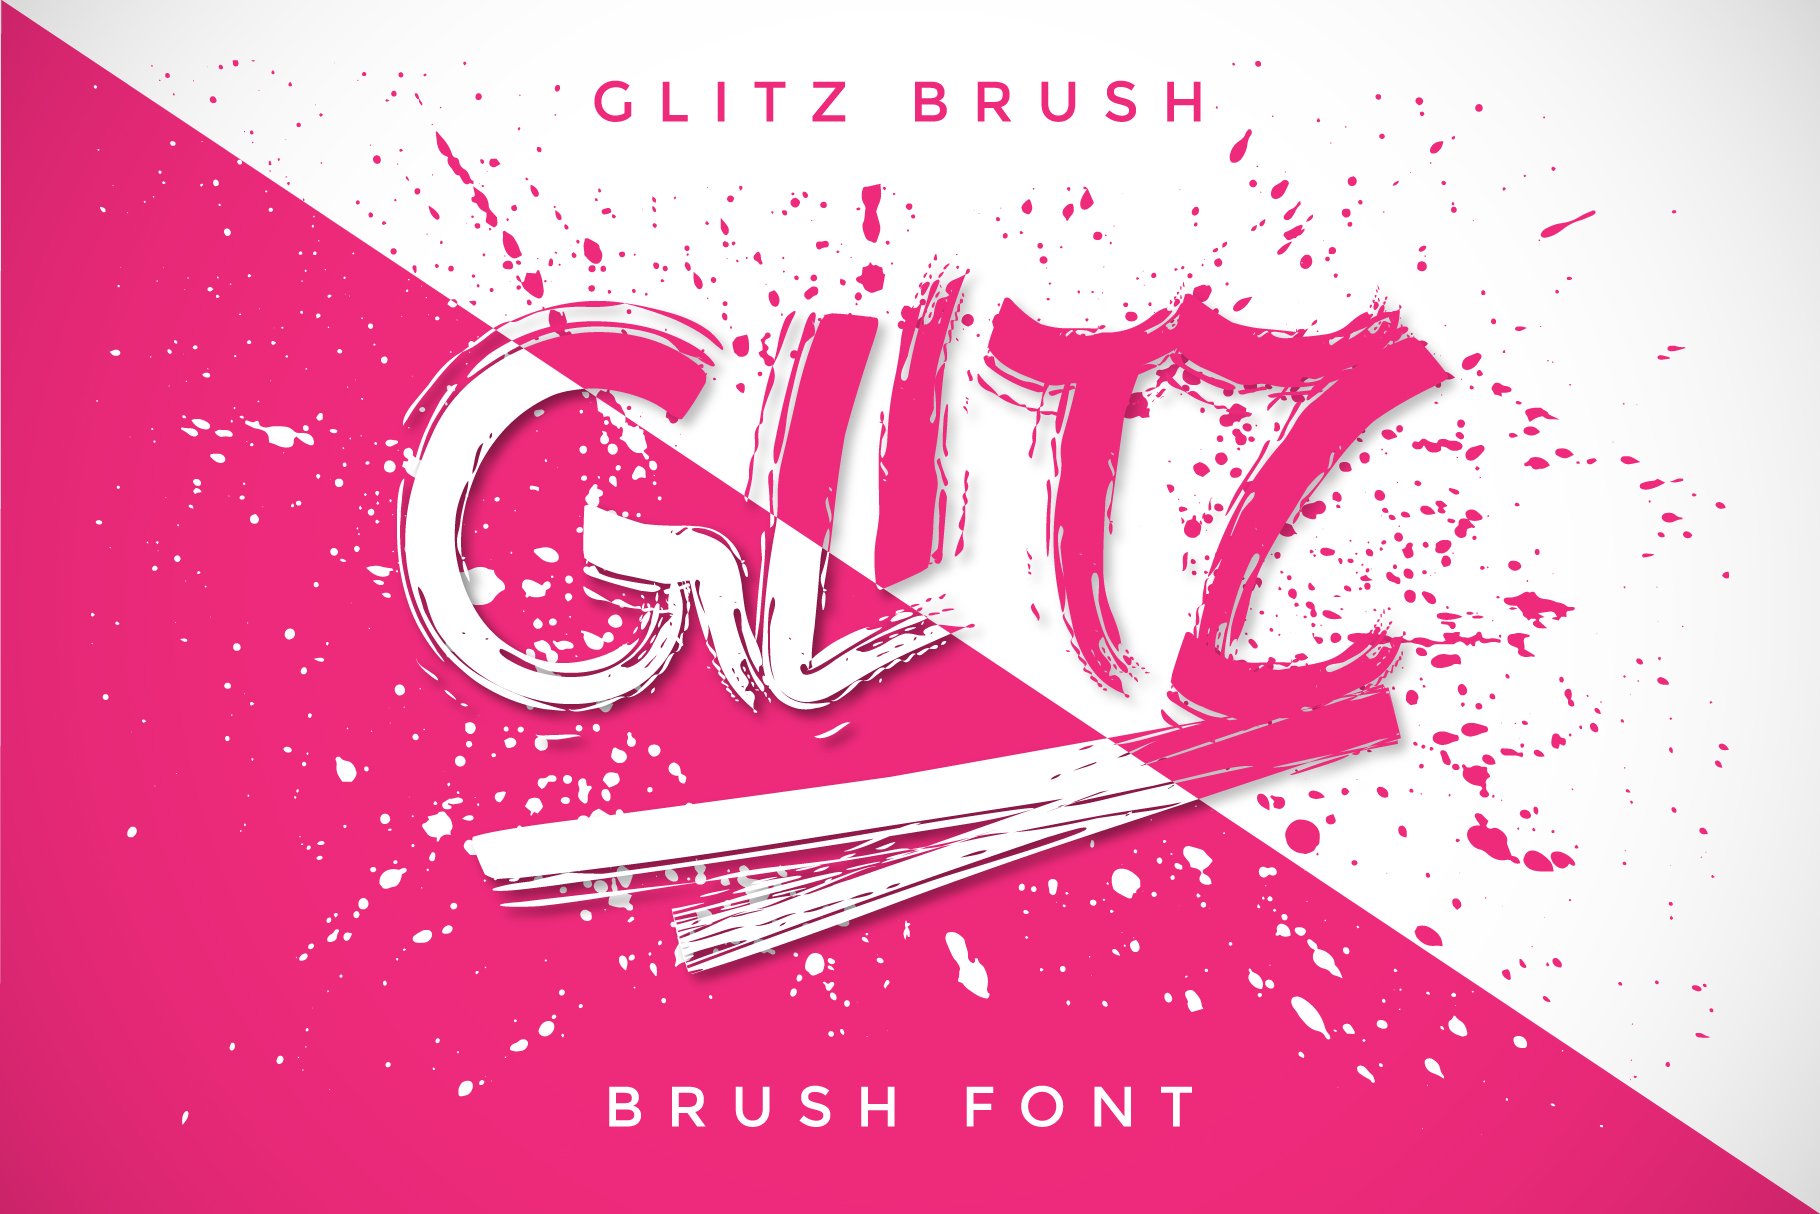 Glitz Brush cover image.